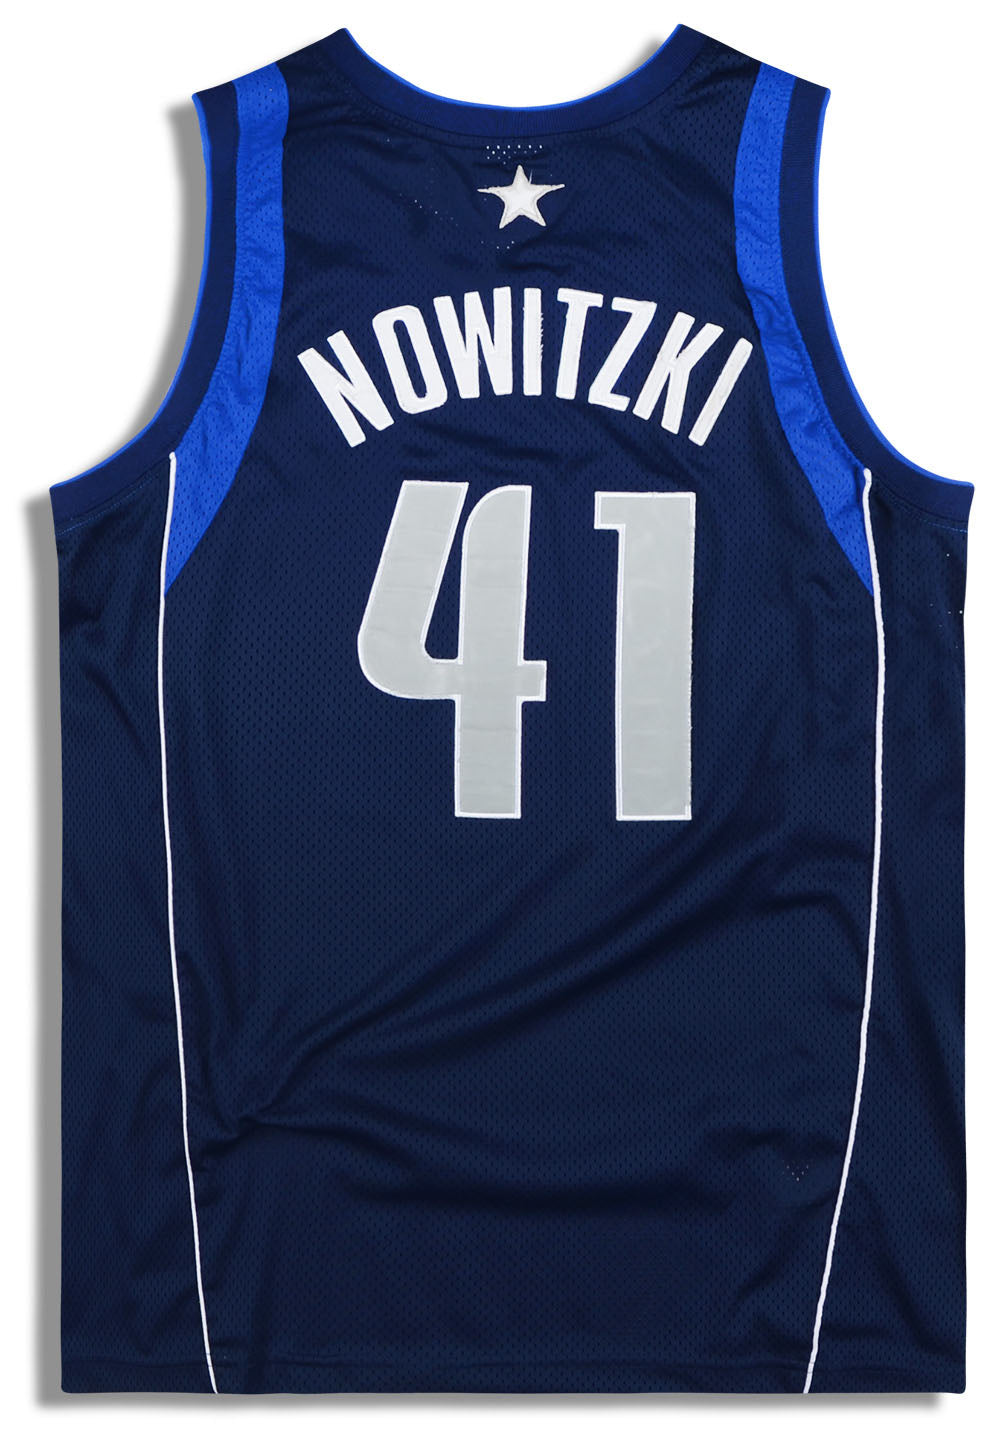 Dirk Nowitzki to Reportedly Have No. 41 Mavericks Jersey Retired